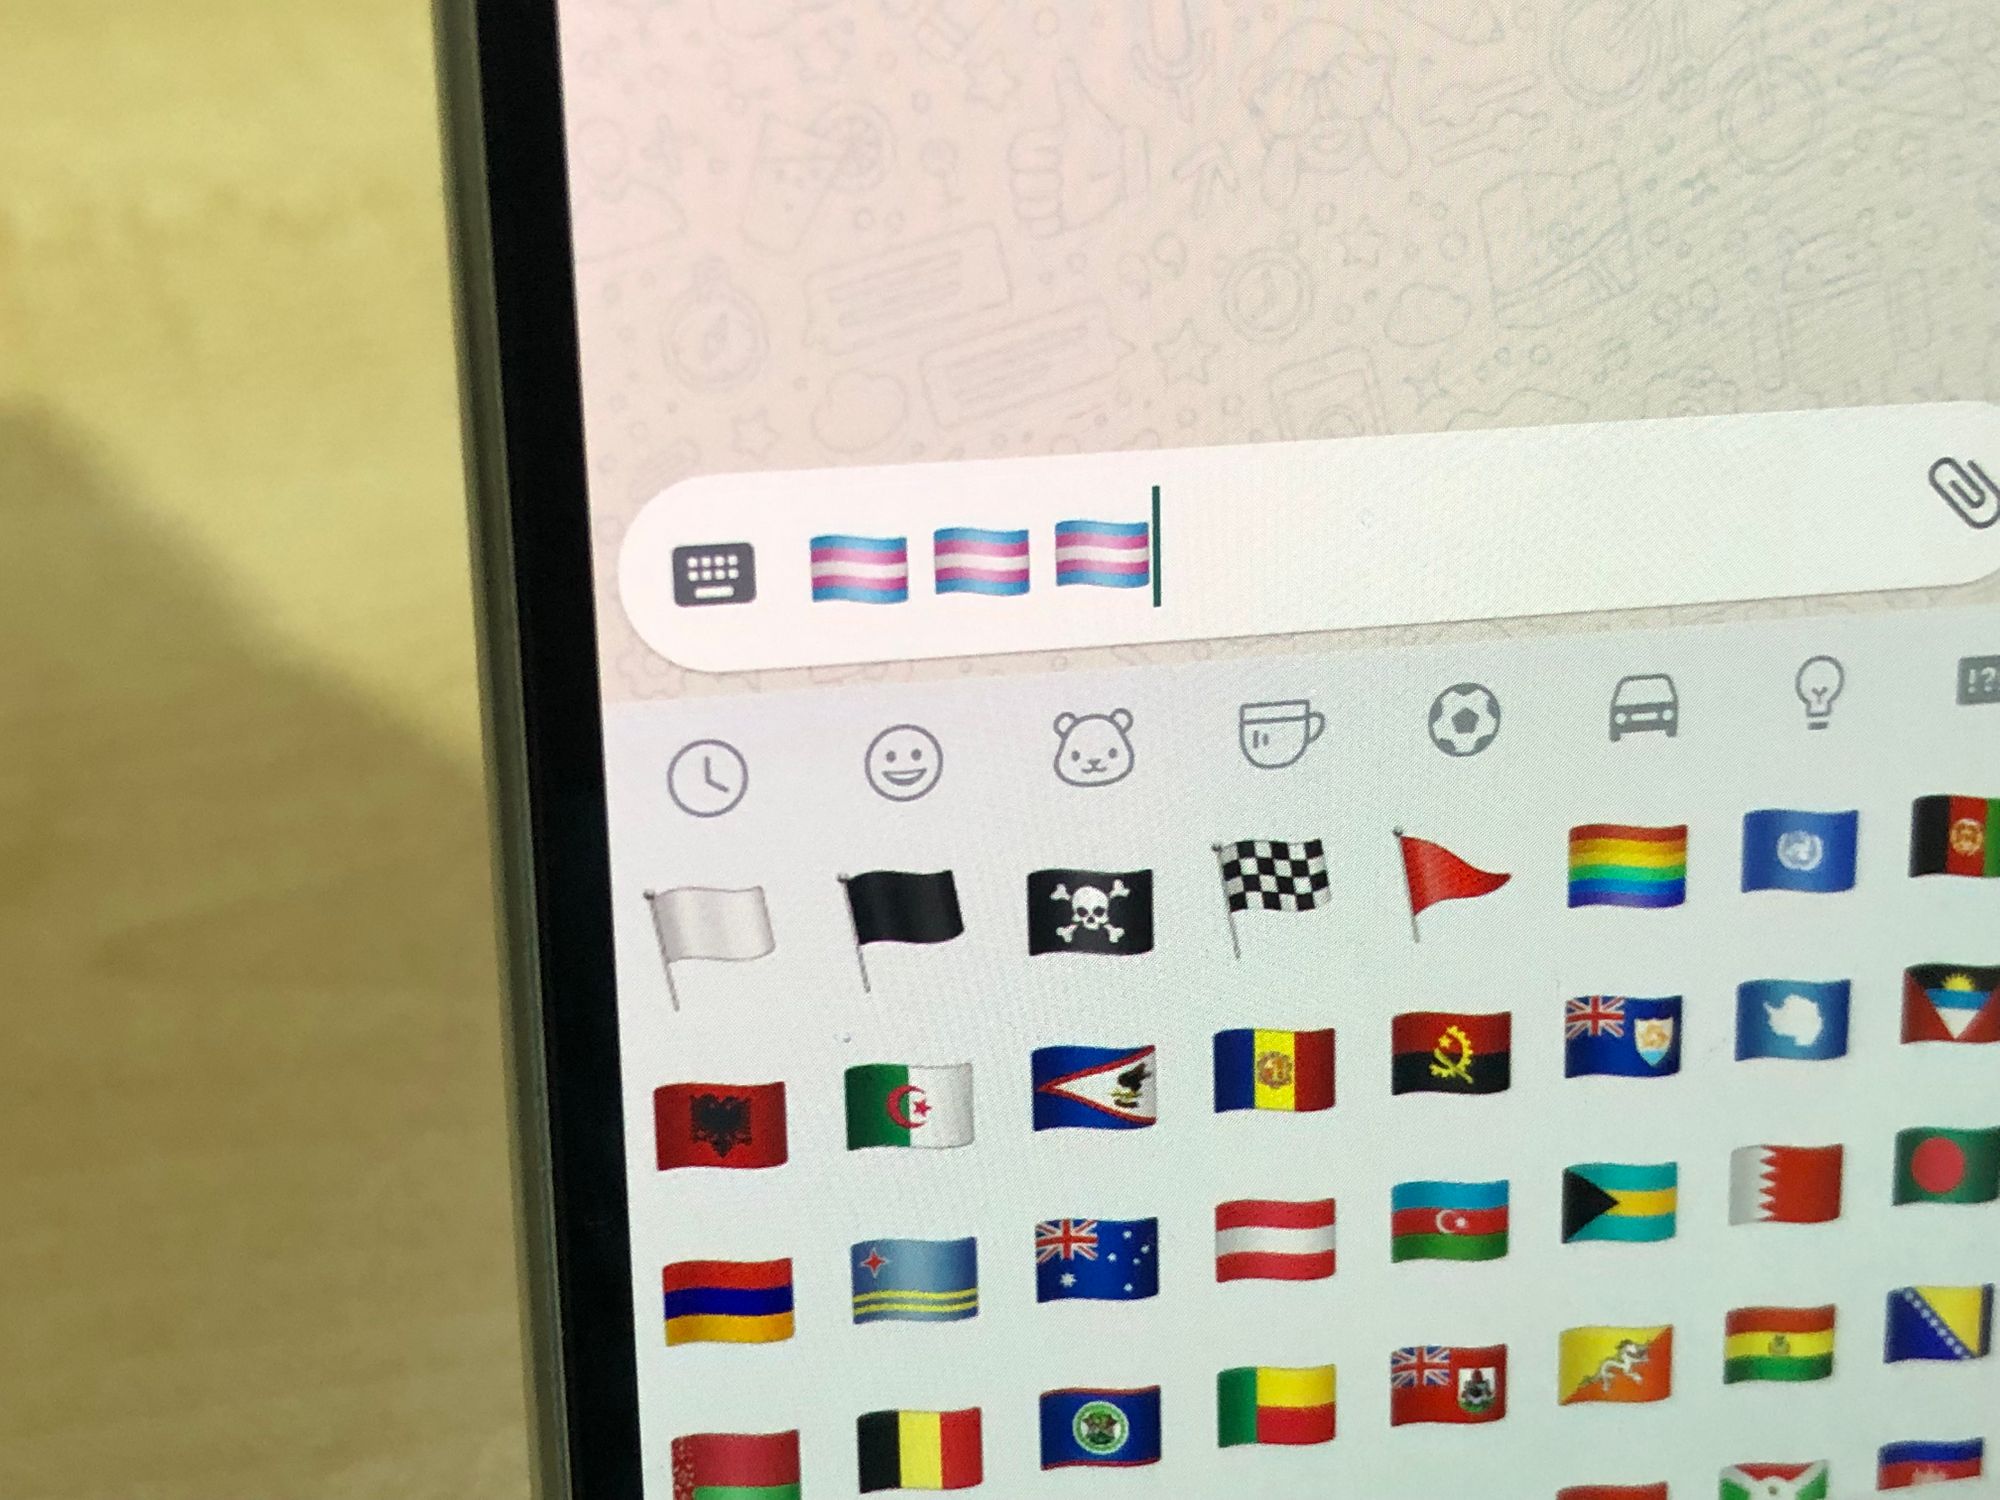 my samsung doesnt have the gay flag emoji